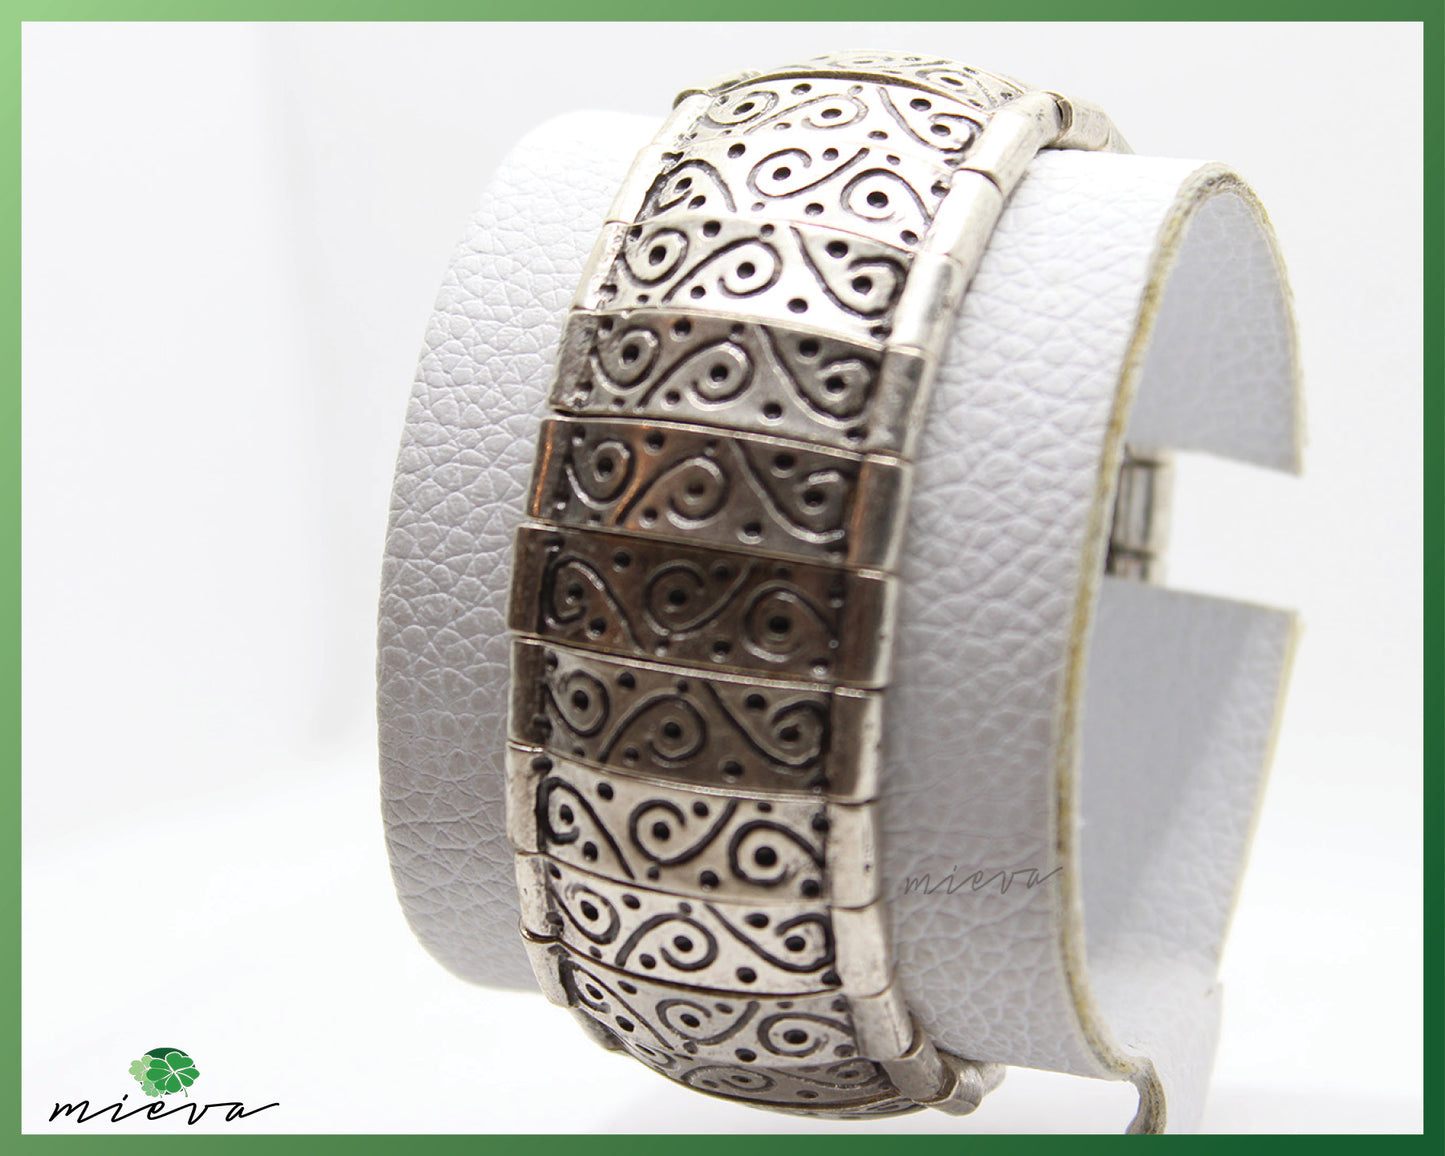 Artisanal Silver Filigree Cuff Bracelet with Decorative Panels